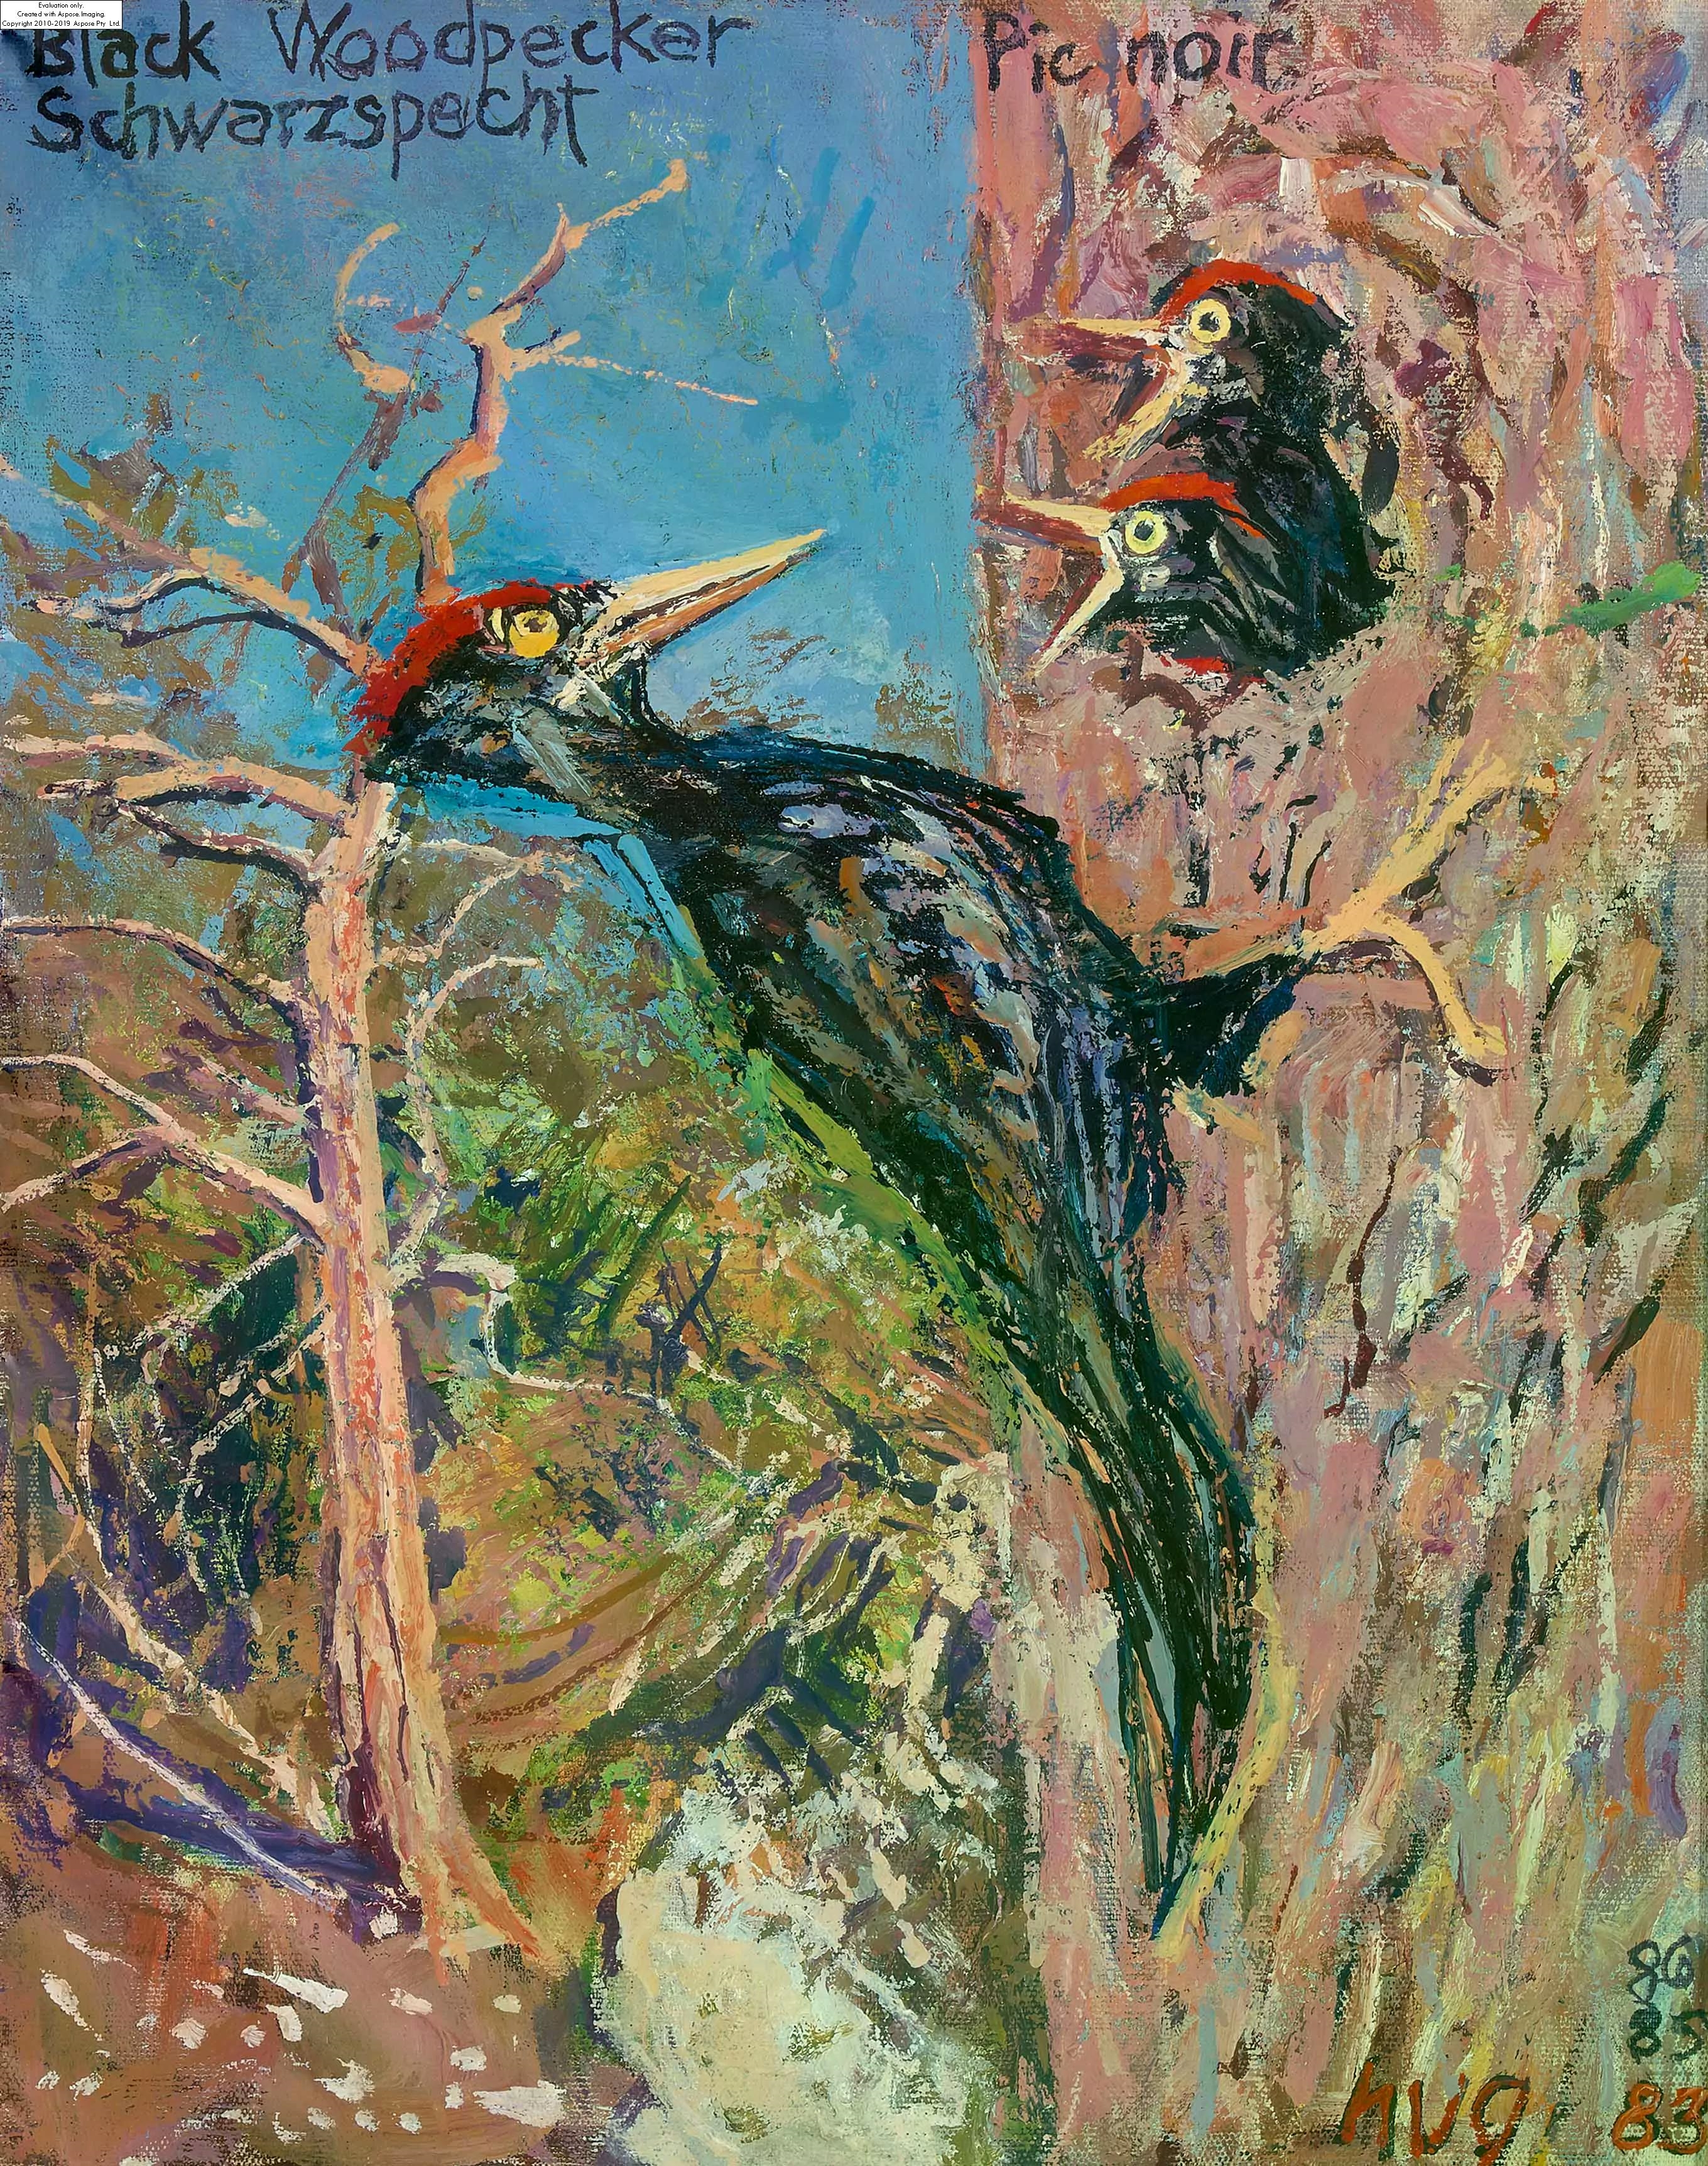 Black Woodpecker, Schwarzspecht / Pic noir by Fritz Rudolf Hug, 1983/86